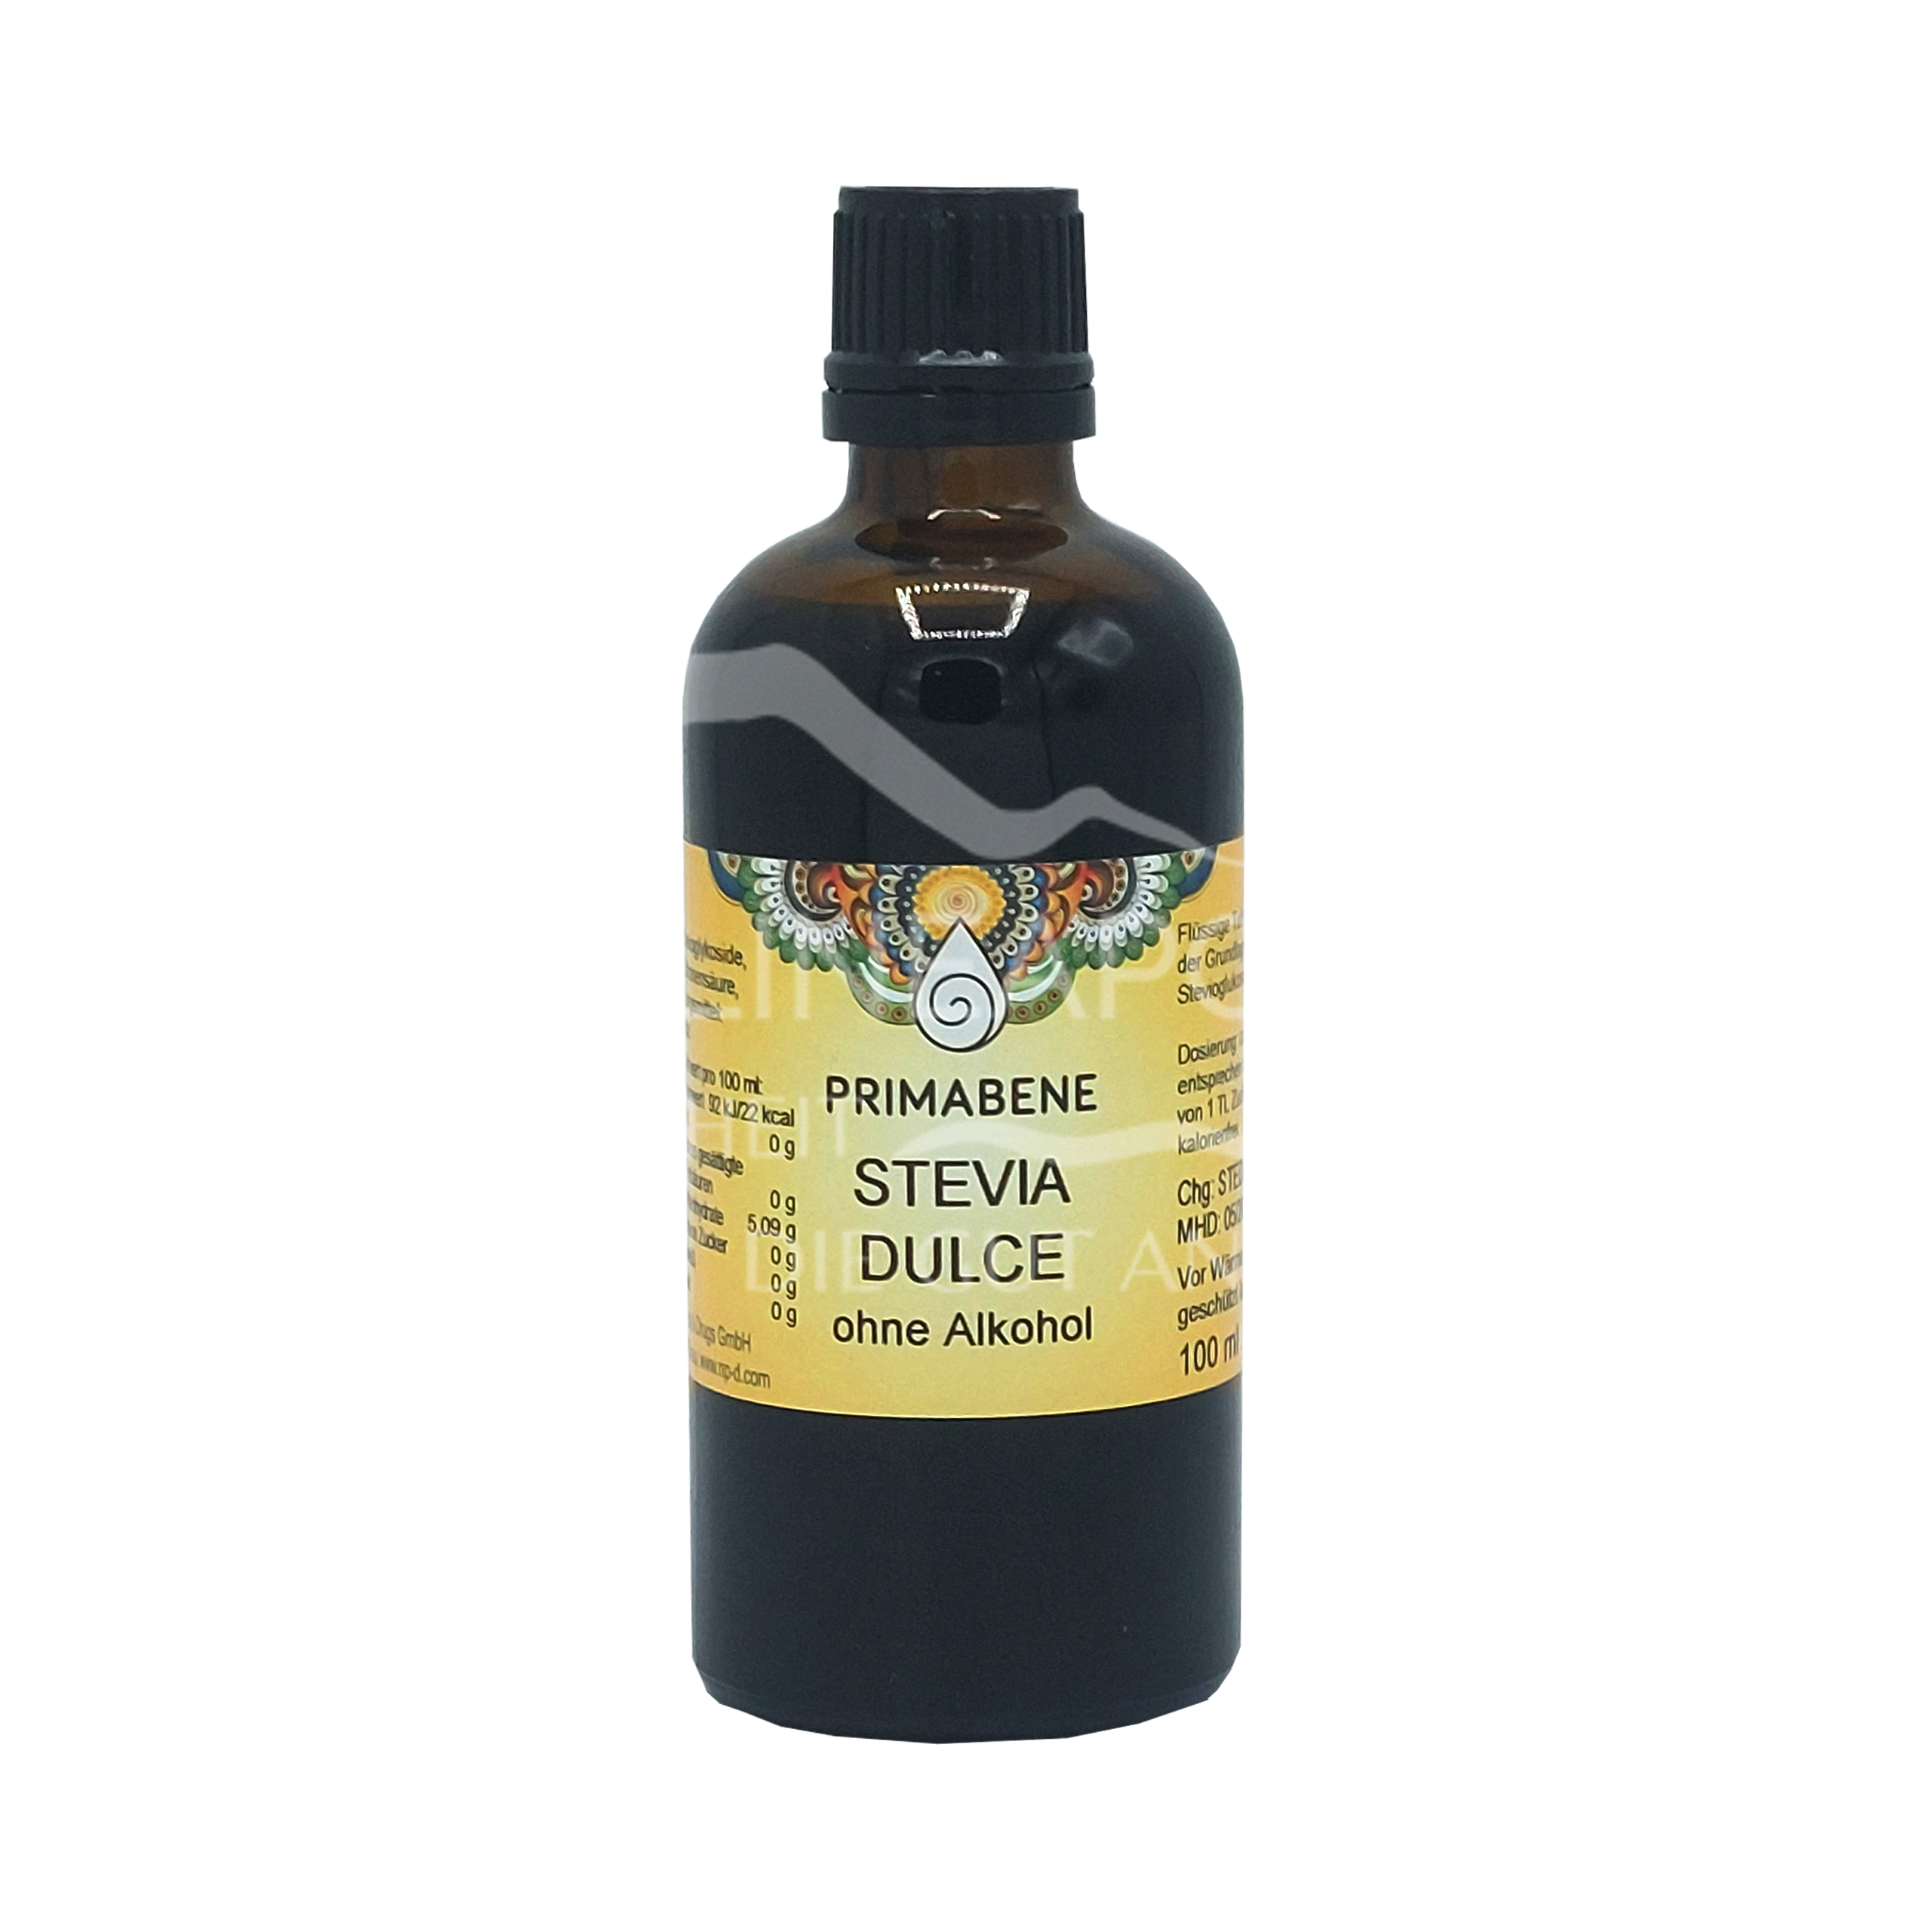 Primabene Stevia Dulce flüssig ohne Alkohol